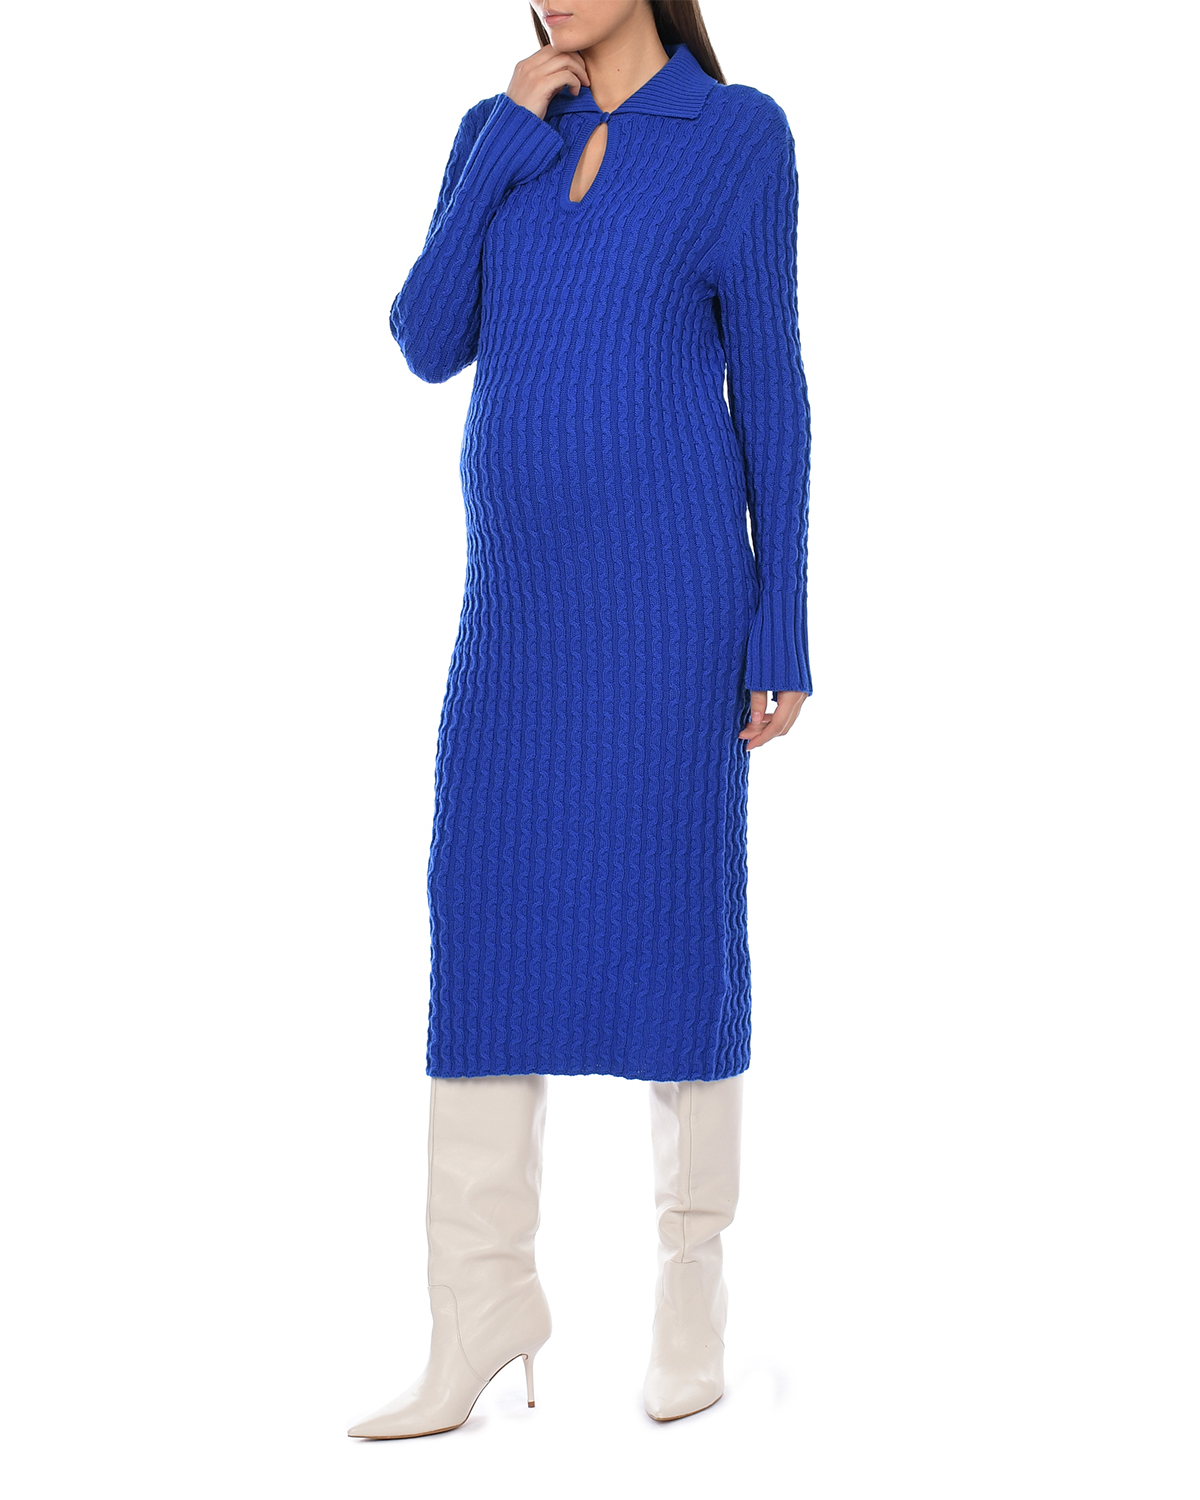 Ярко-синее платье из трикотажа Vivetta, размер 42, цвет нет цвета - фото 5